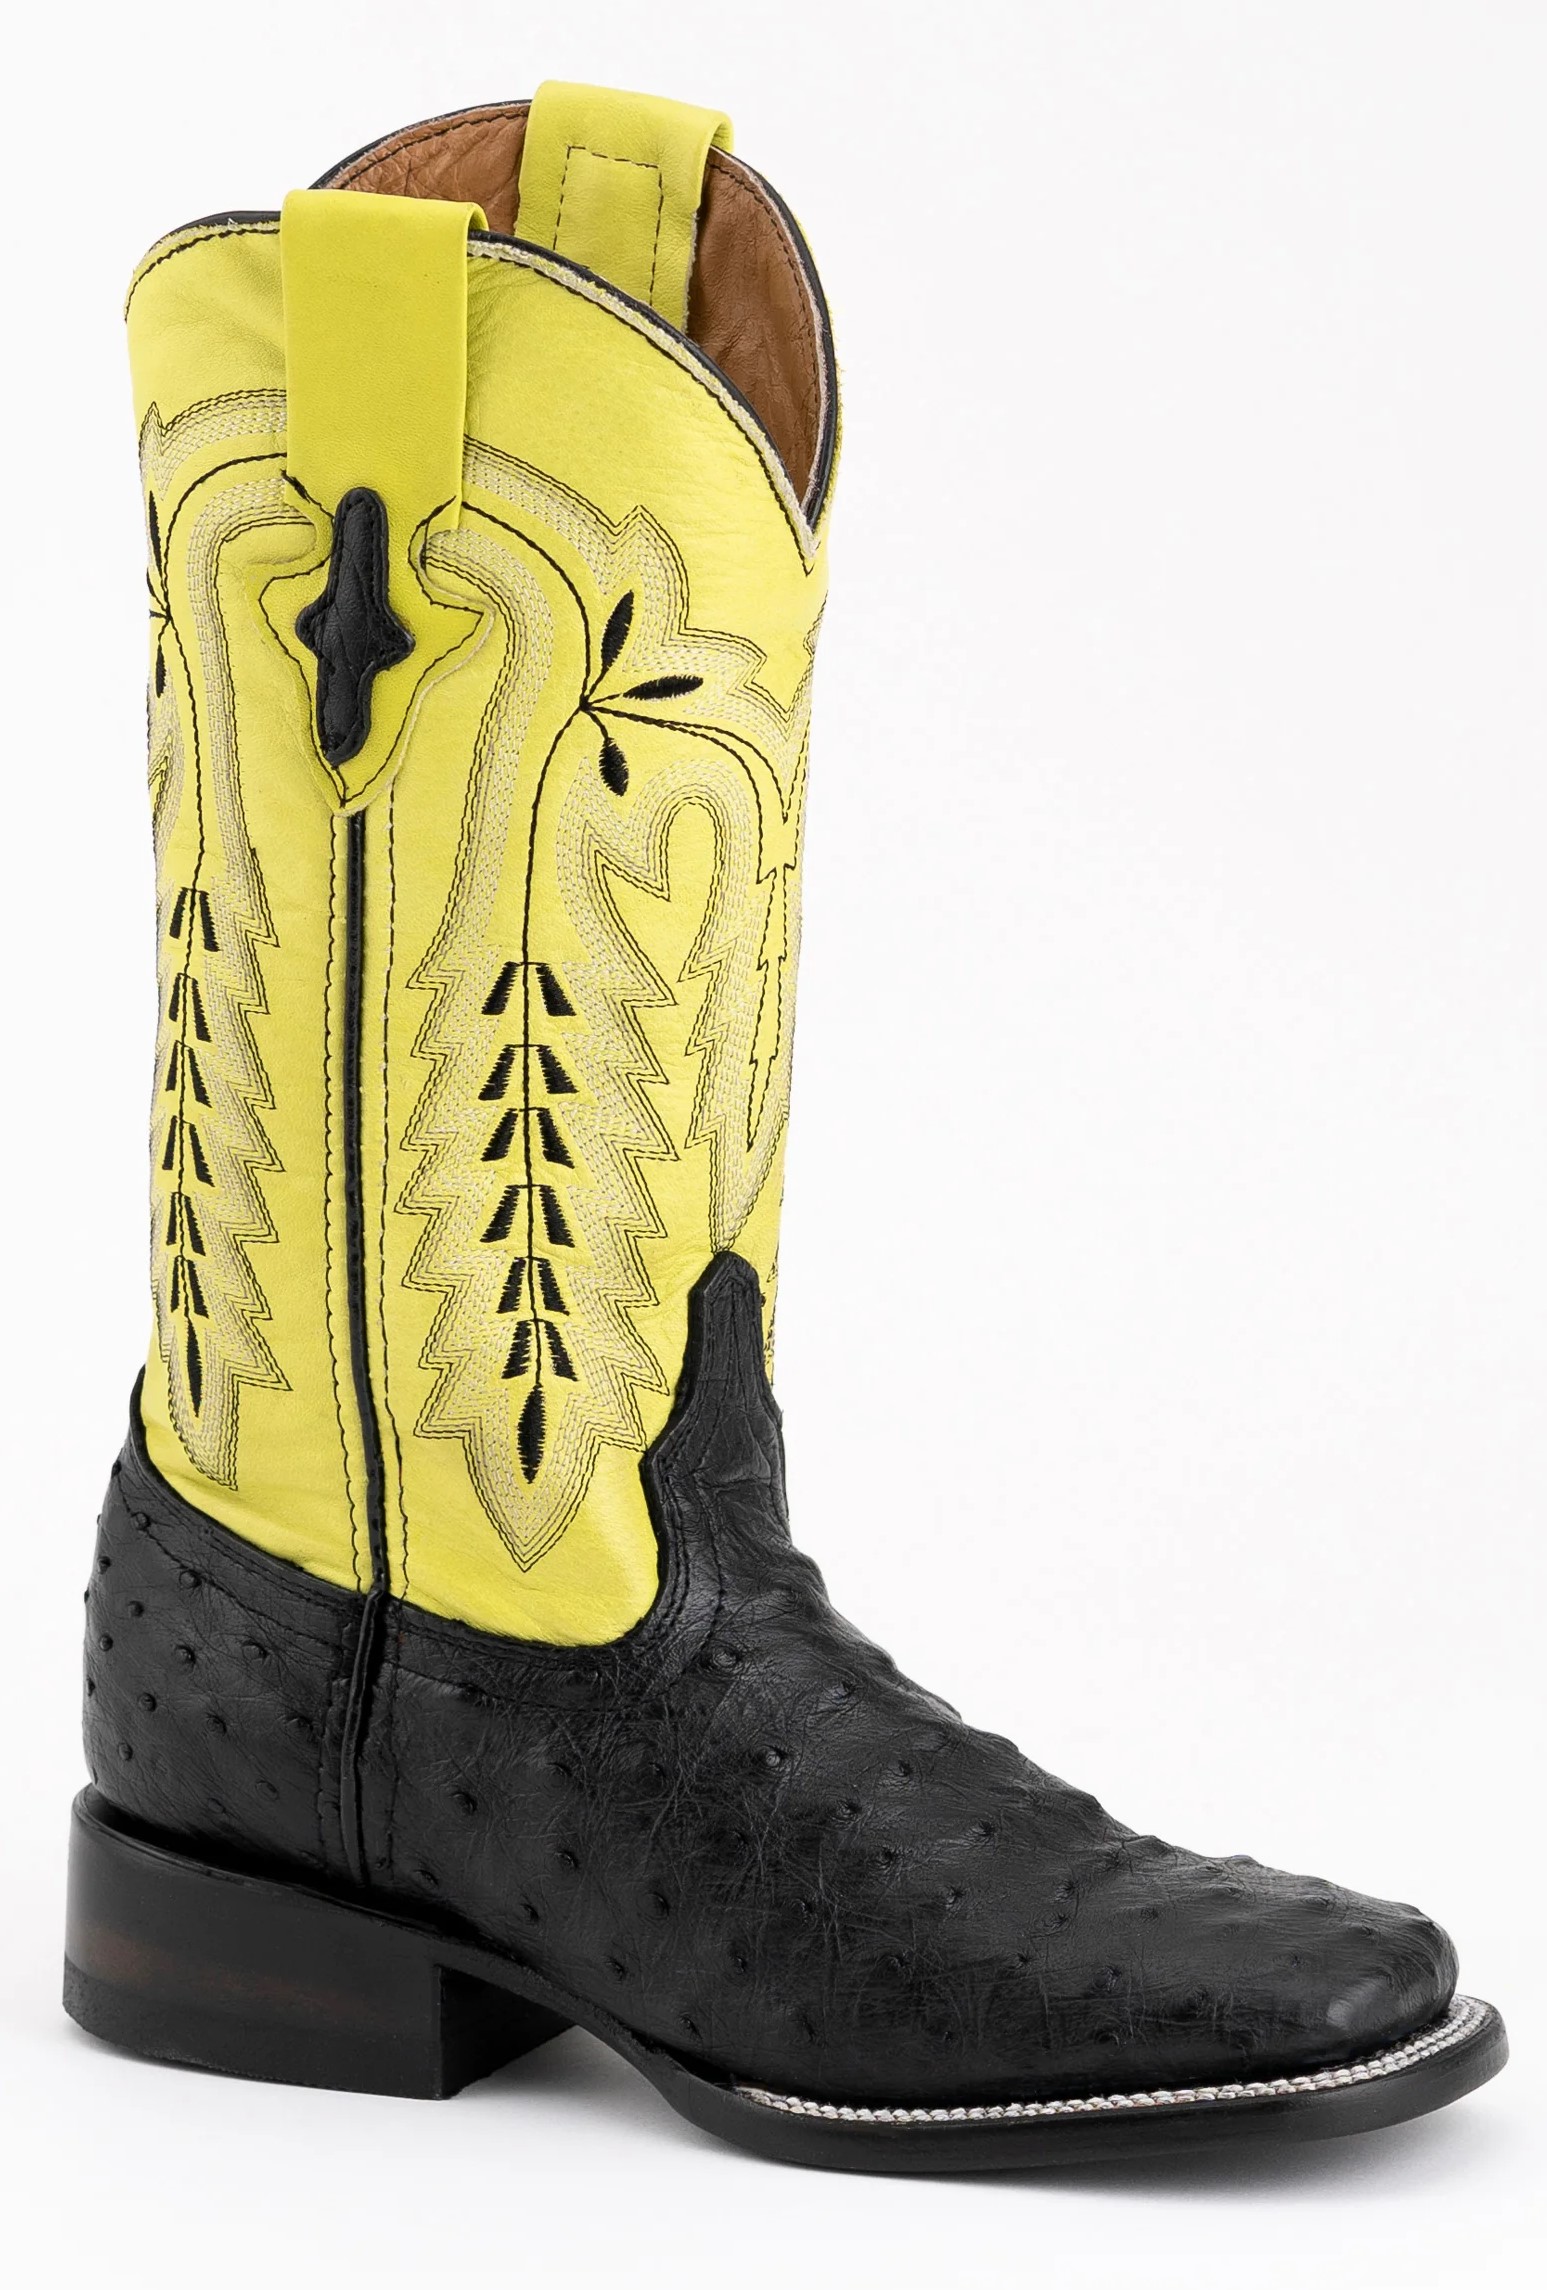 Ferrini Ladies "Colt" Black Genuine Full Quill Ostrich Leather Square Toe Cowgirl Boots 80193-04